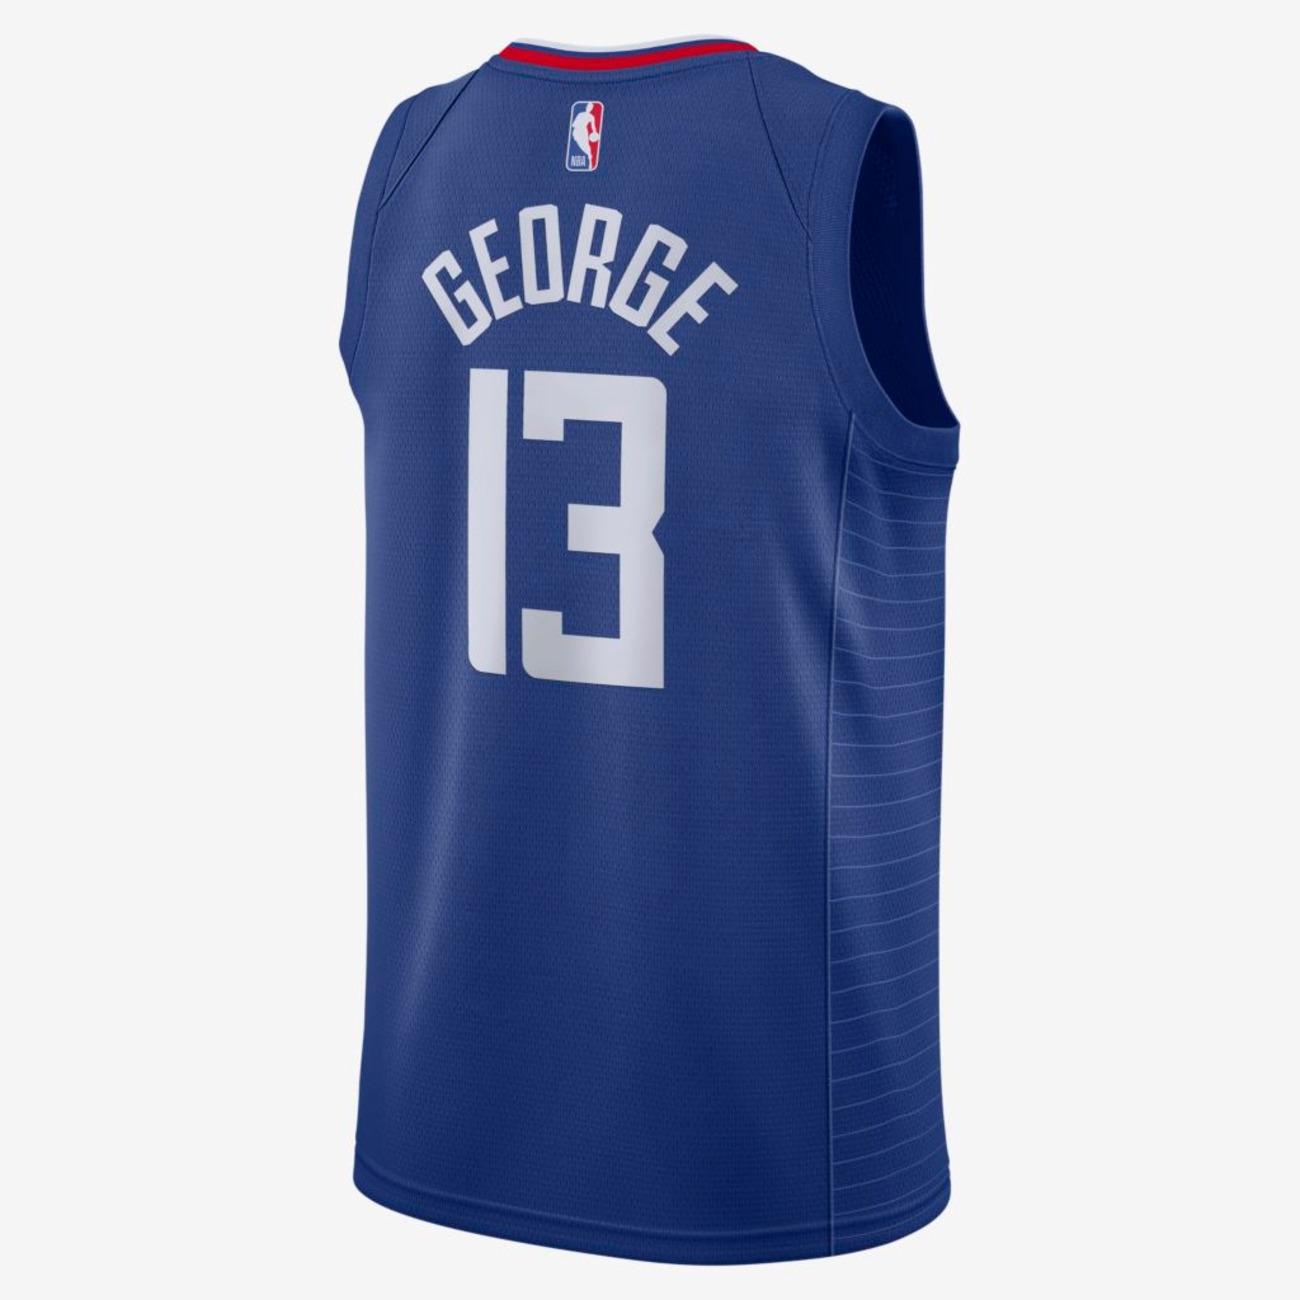 Regata Nike Paul George Clippers Icon Edition 2020 Masculina - Foto 2